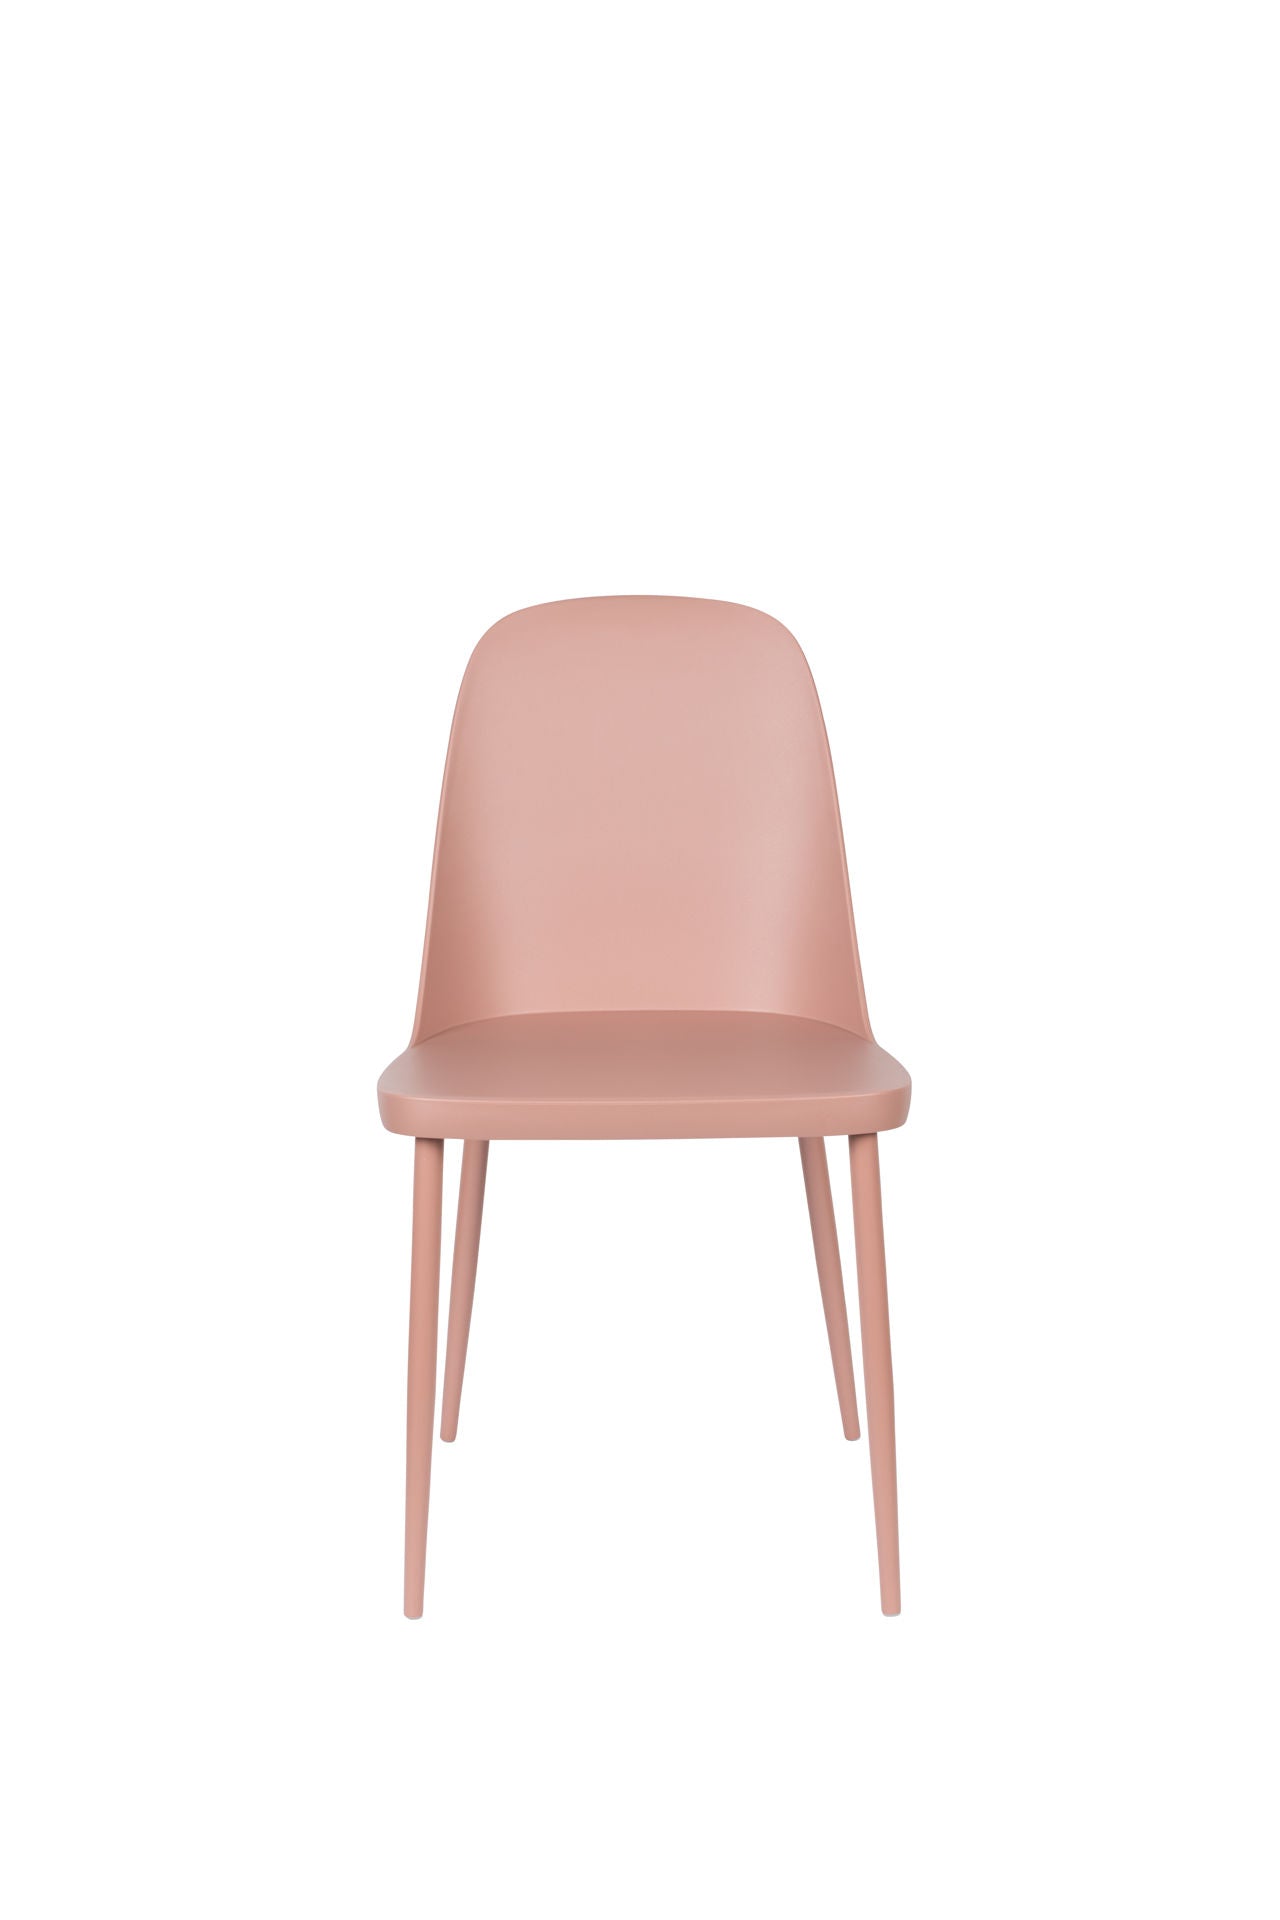 Nancy's Scott Chair - Scandinavian - Pink - Polypropylene, Steel - 53.5 cm x 46 cm x 85 cm